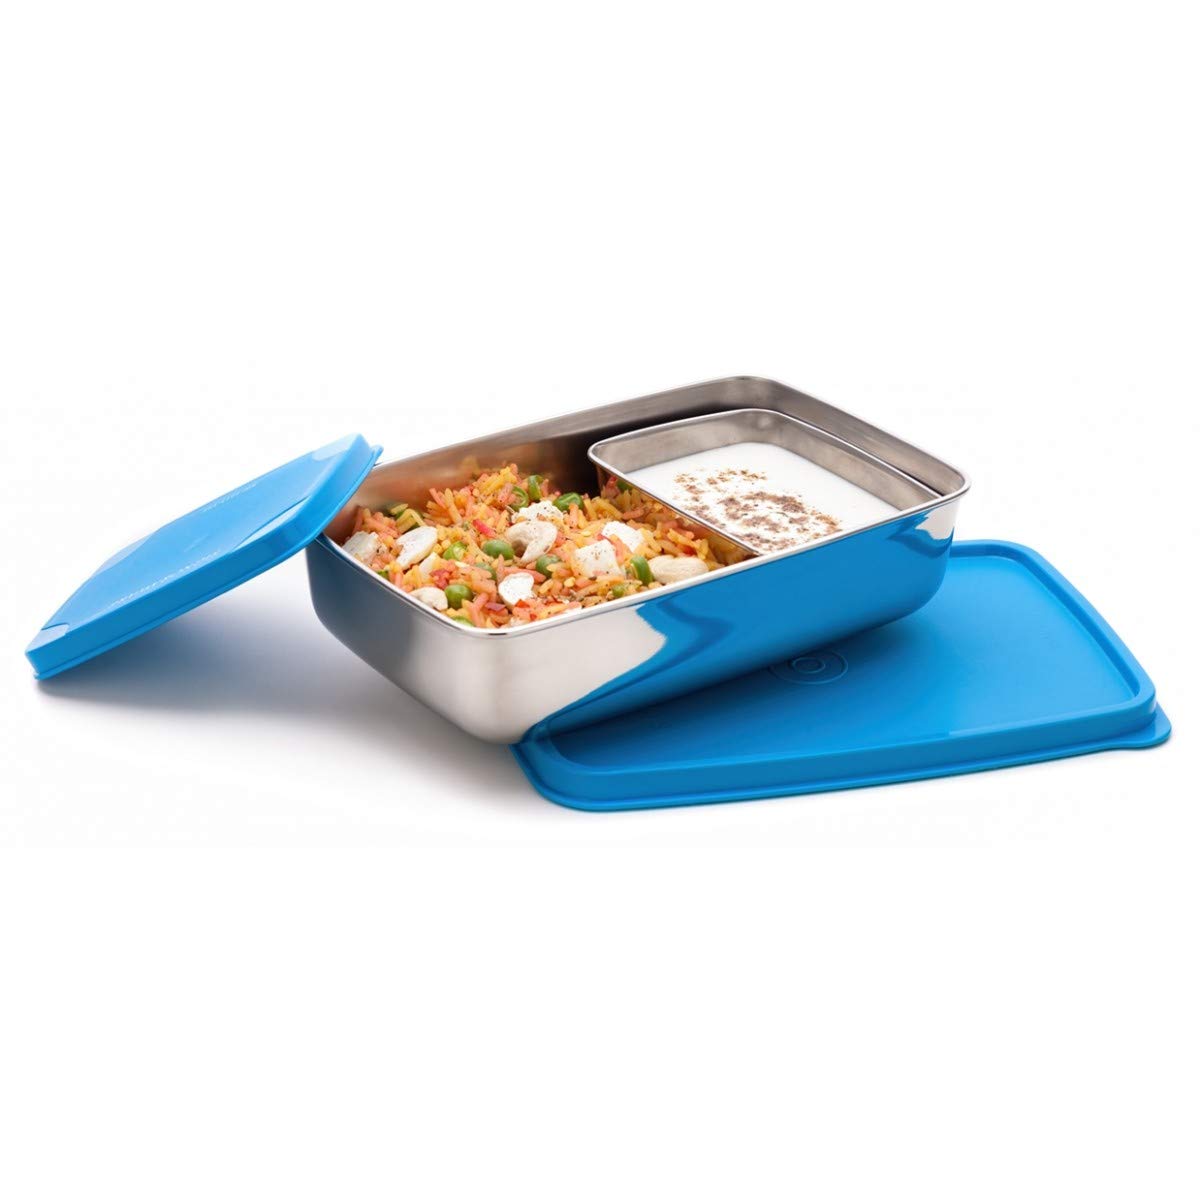 Signoraware Compact Steel Lunch Box (Small) - 3522 